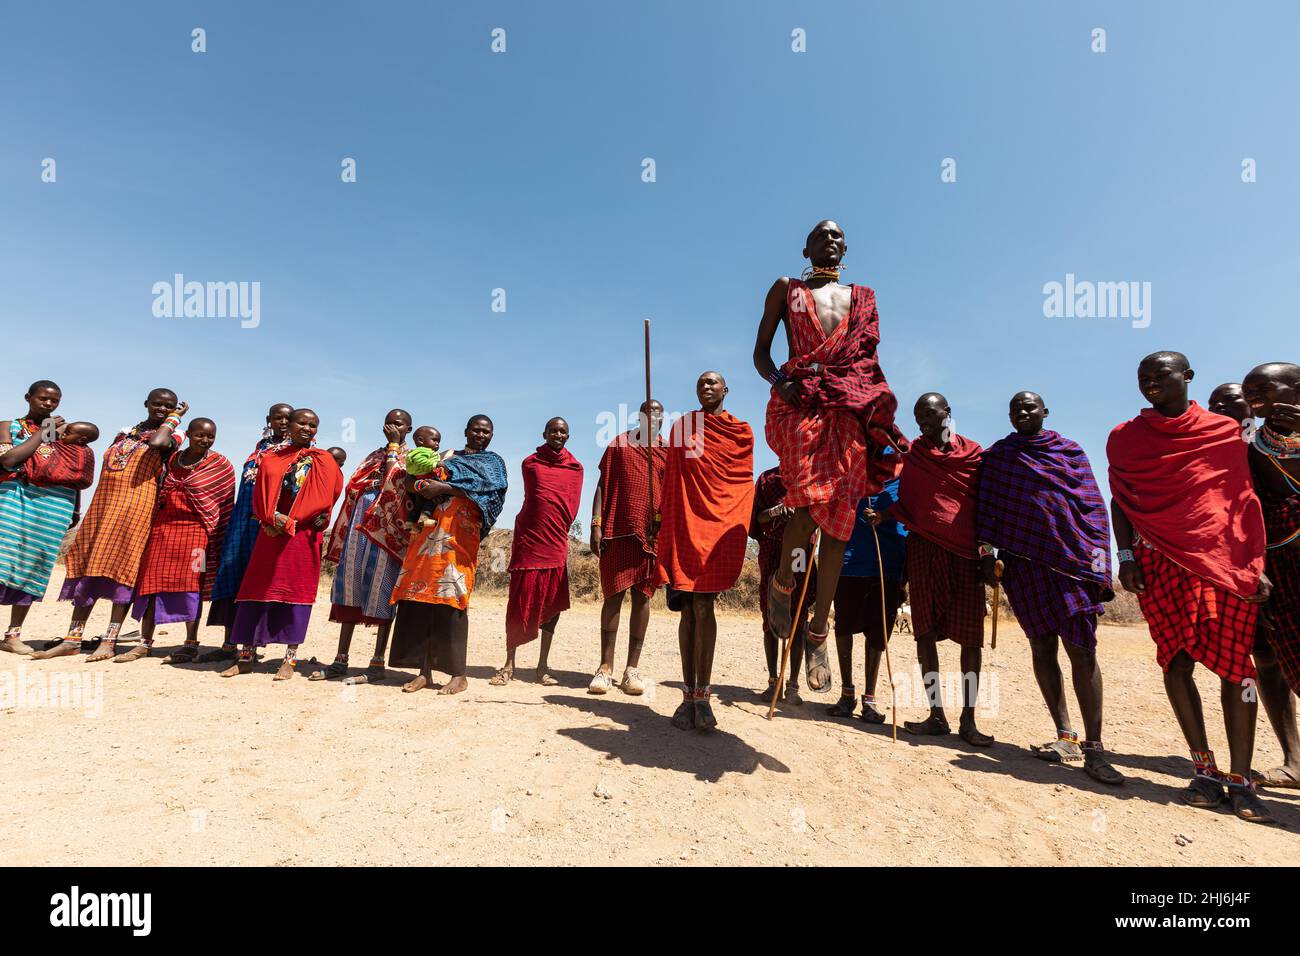 AMBOSELI NATIONAL PARK - SEPTEMBER 17, 2018: Traditional jumping dance of Masai people Stock Photo